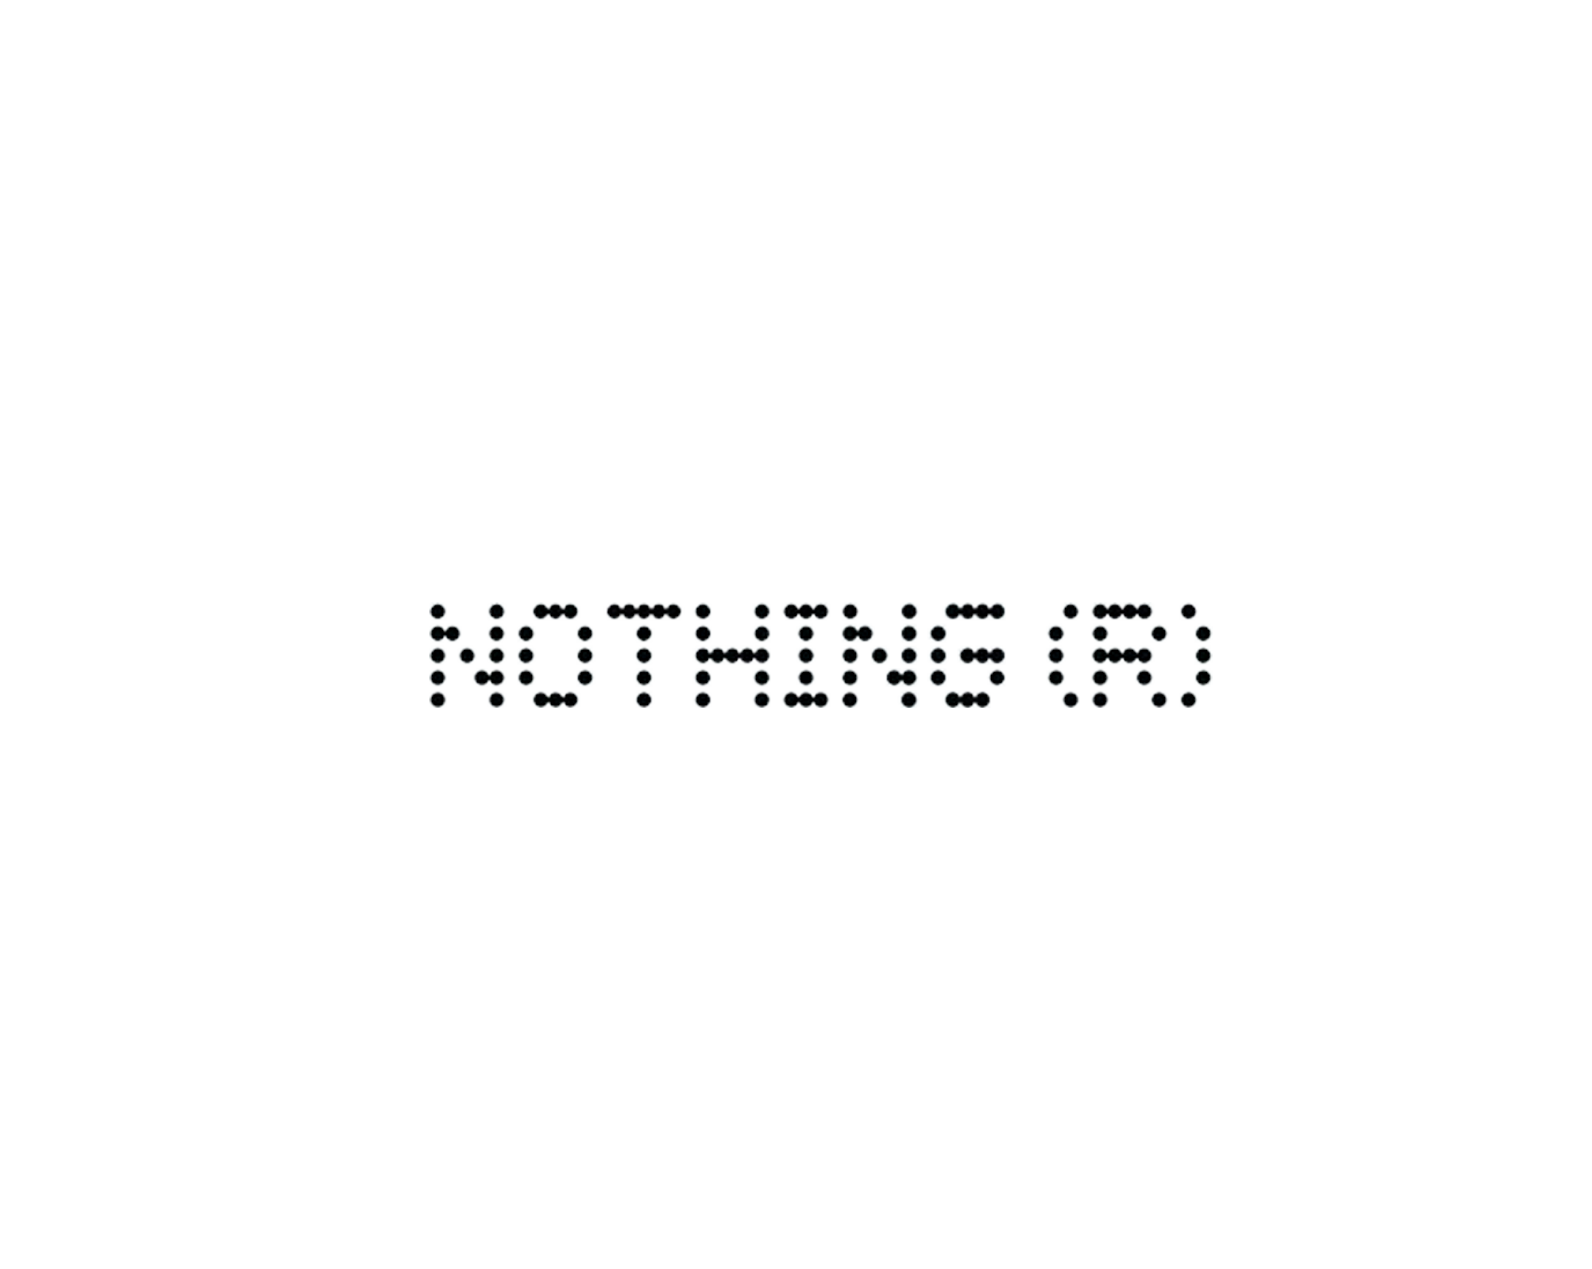 NOTHING